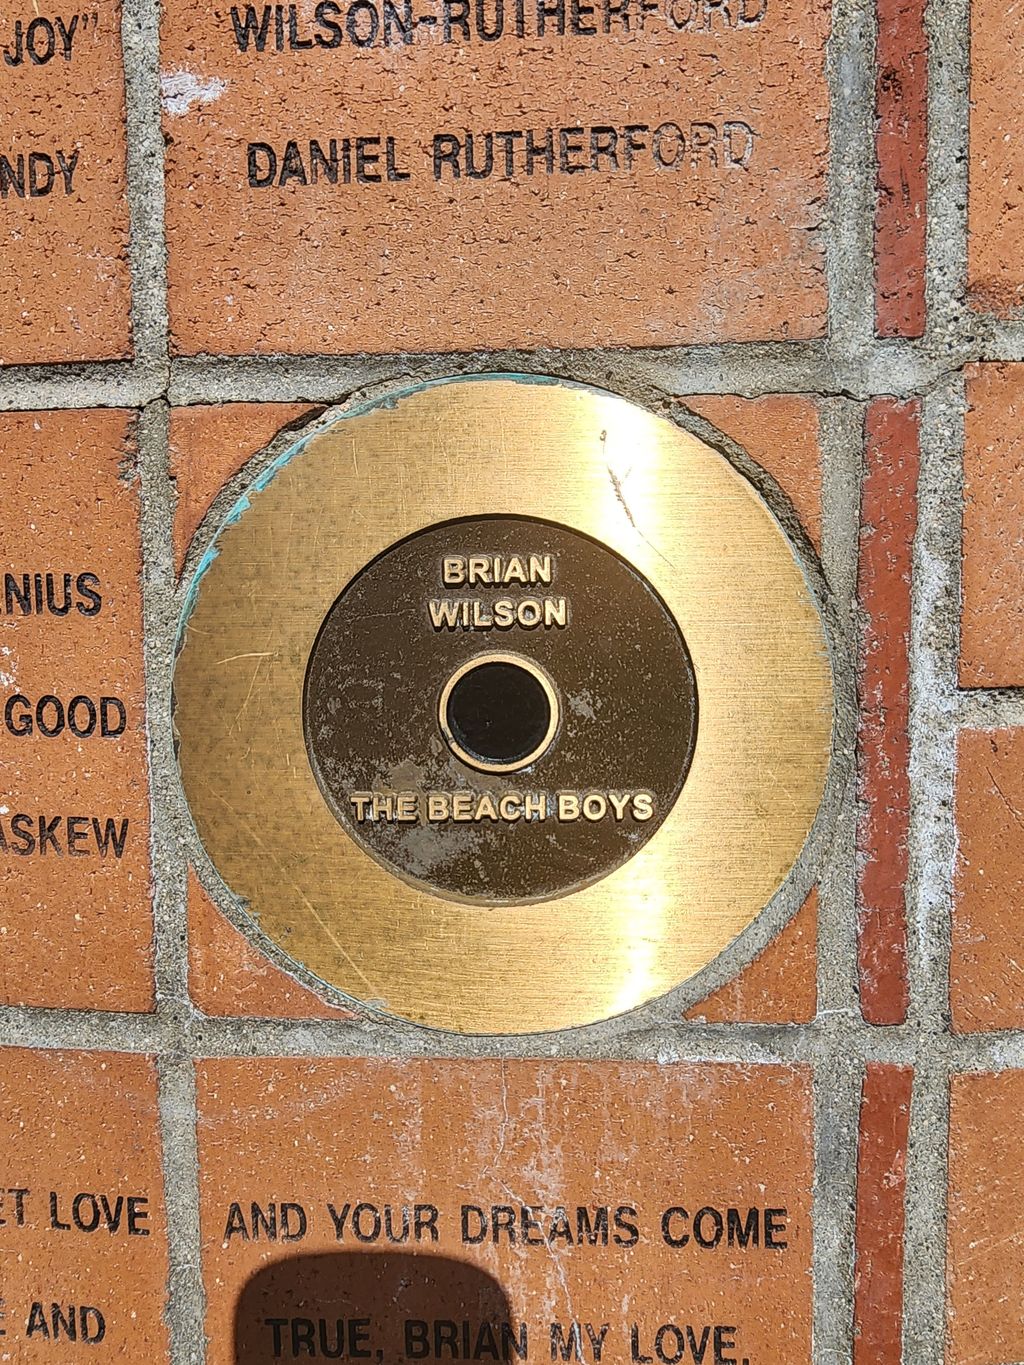 Beach Boys Historic Landmark